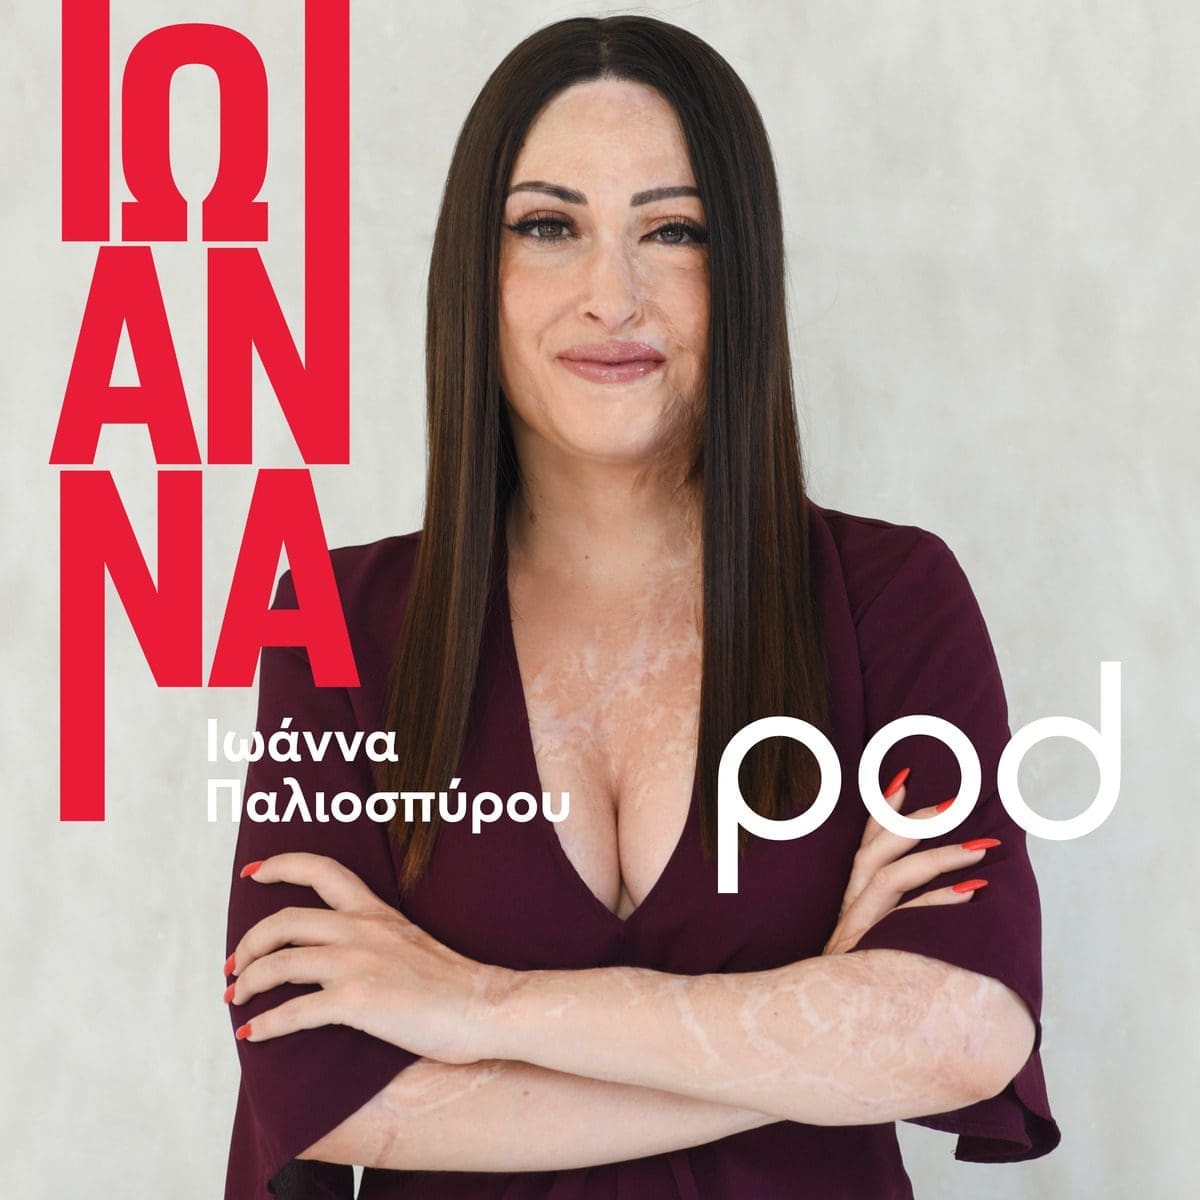 H Ιωάννα Παλιοσπύρου έχει το δικό της podcast.